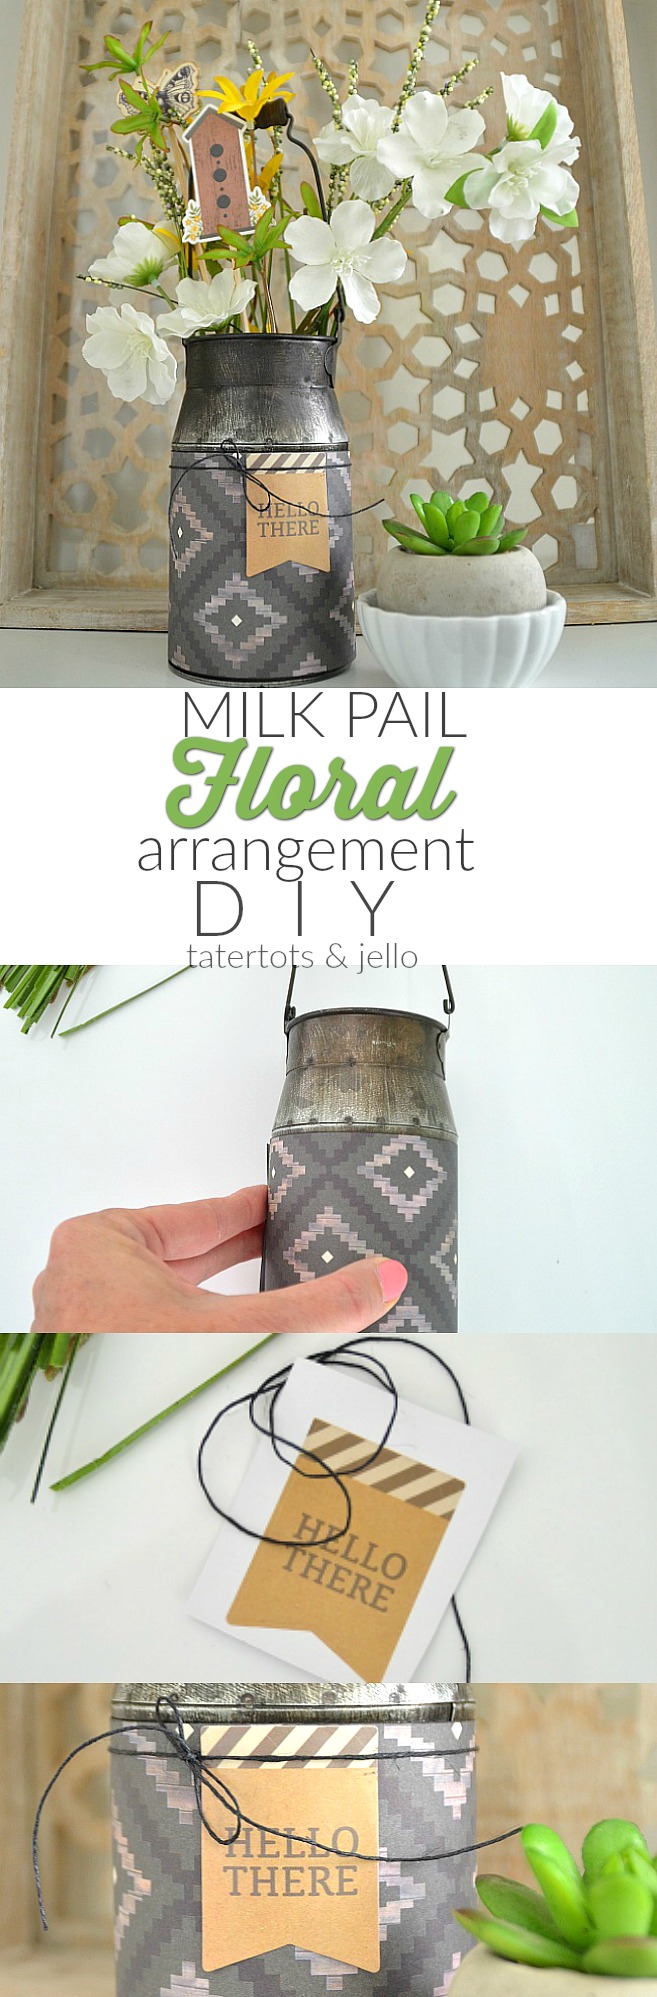 spring milk pail floral arrangement diy paper crafting tutorial 